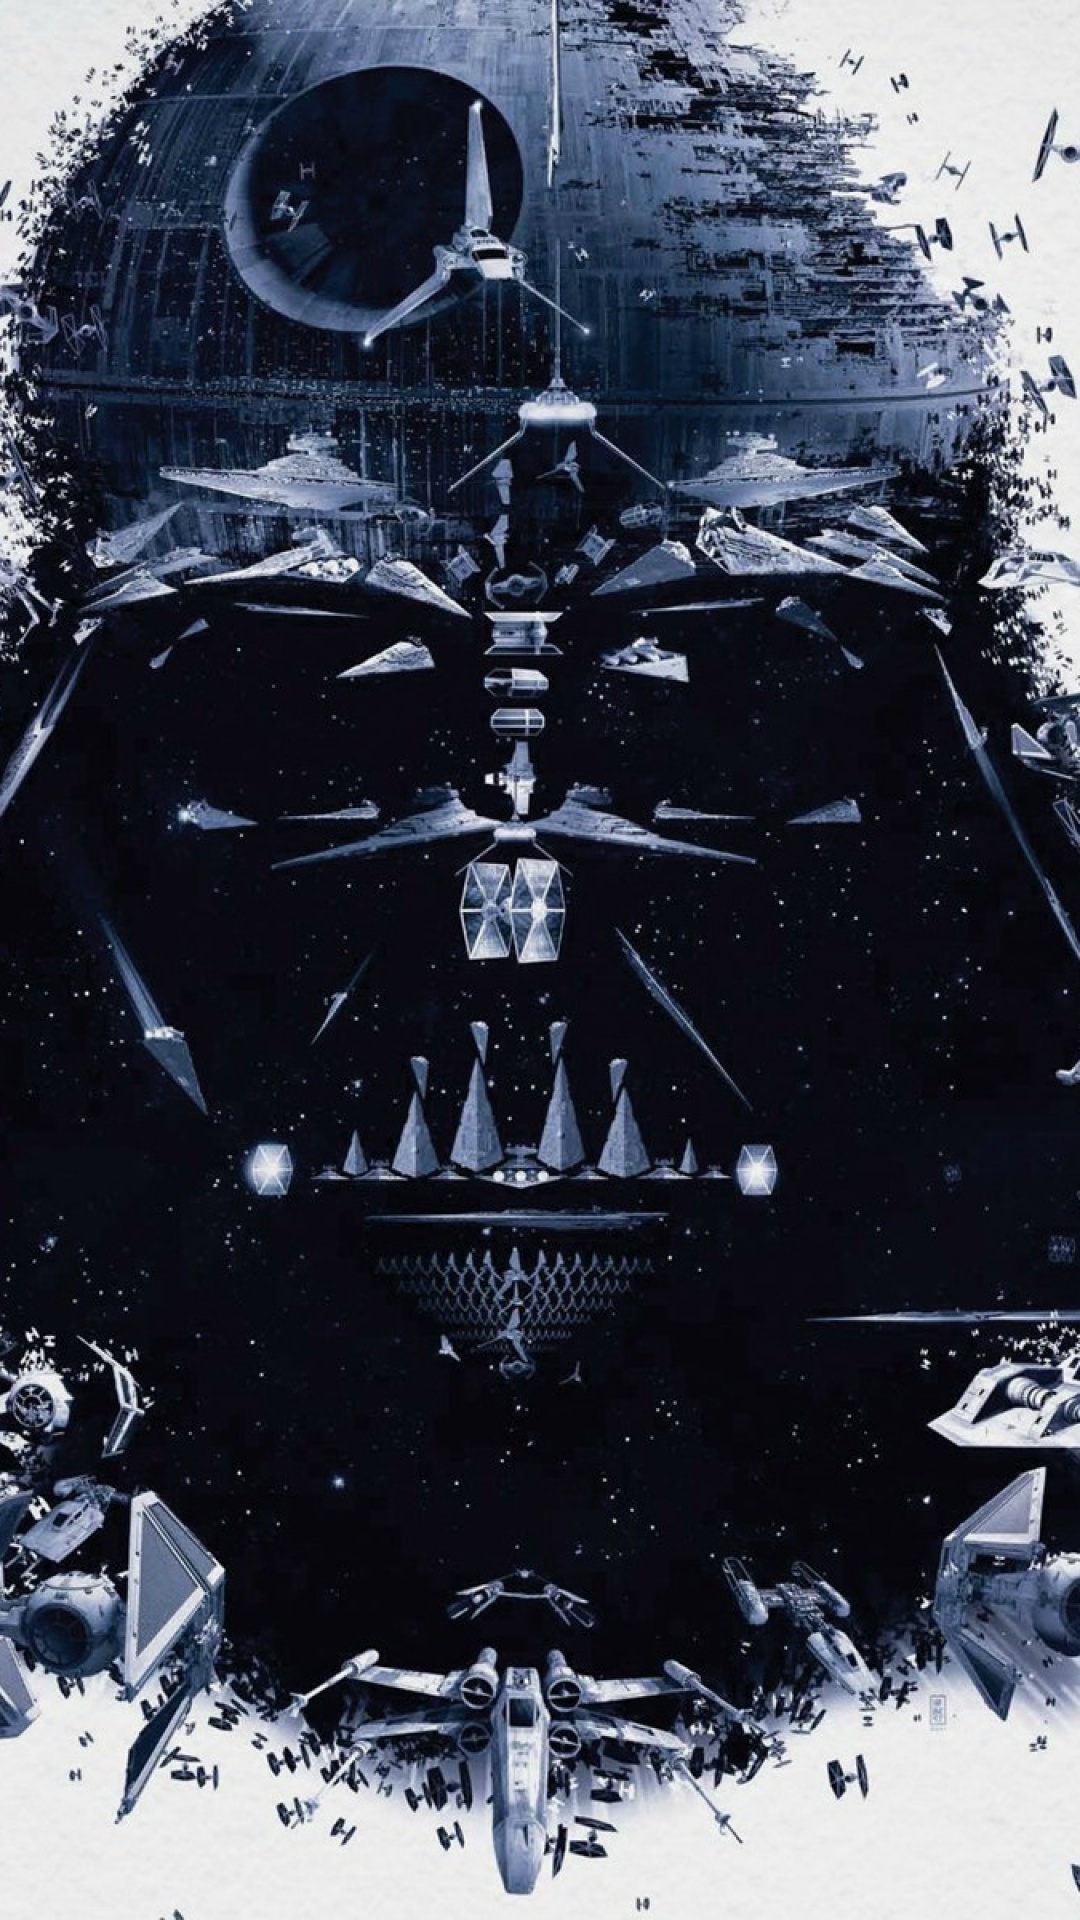 Star Wars Darth Vader Spaceships Android Wallpaper free download